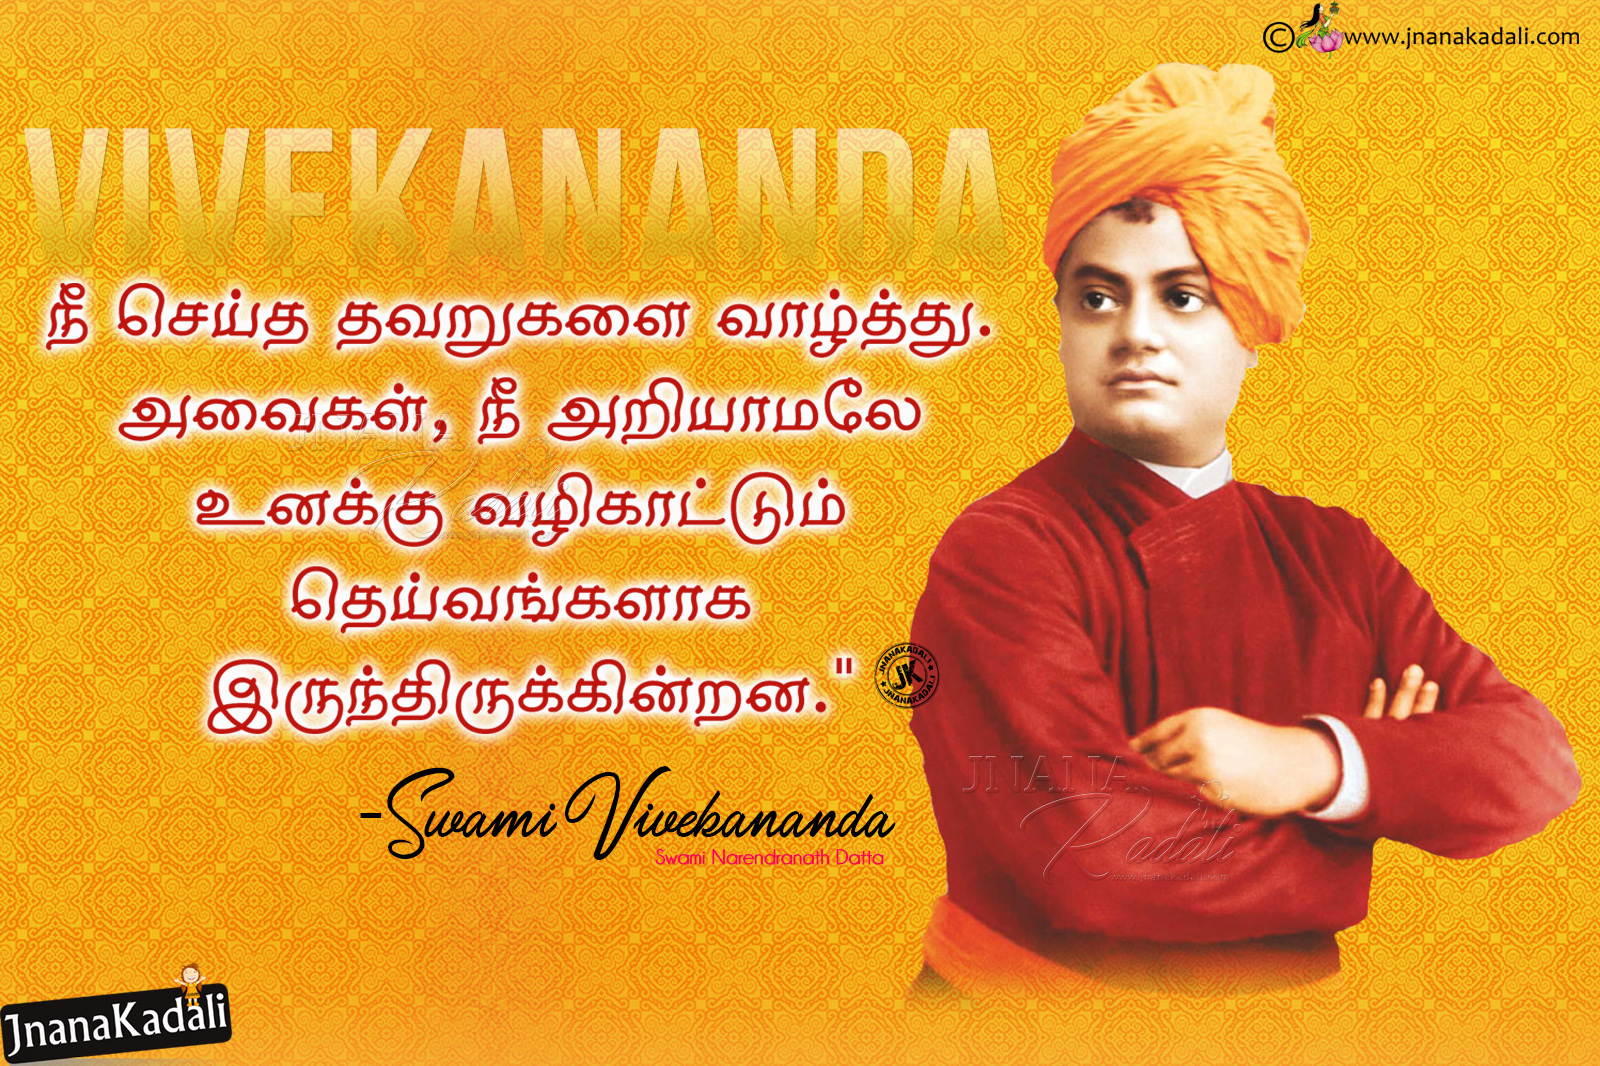 Tamil Swami vivekananda Motivational Sayings for Youth Vivekananda